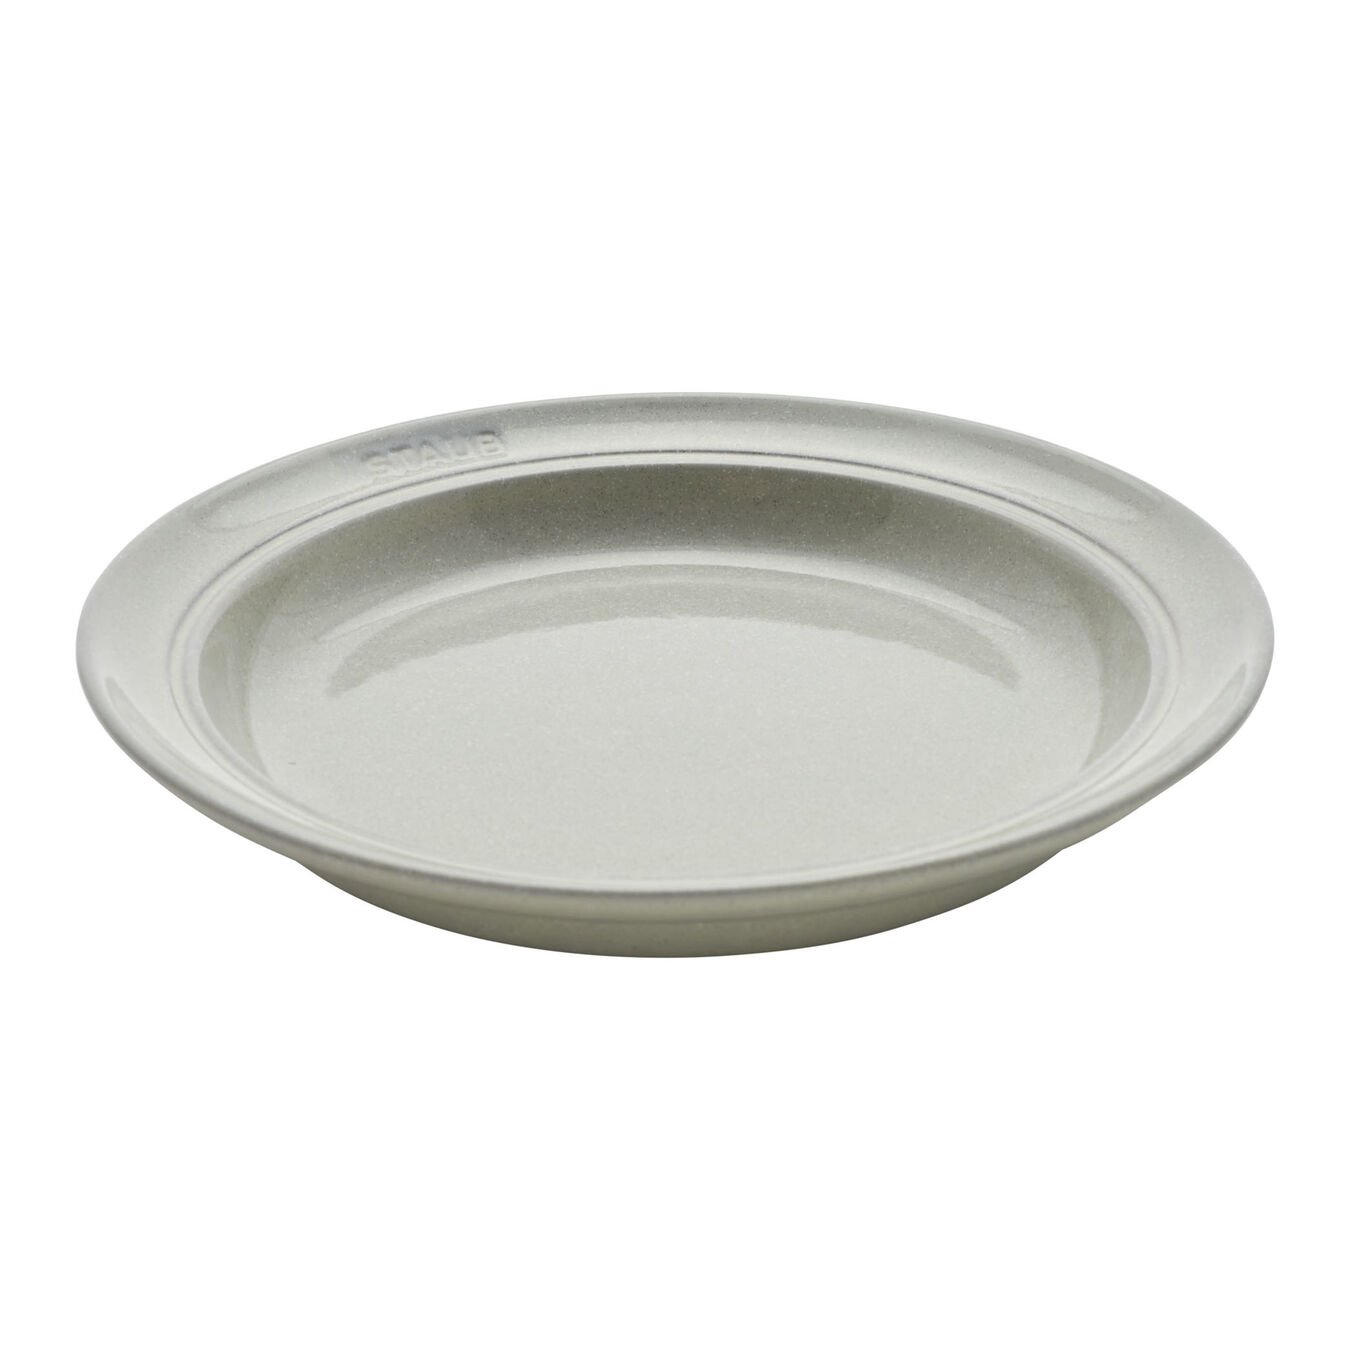 Soup/Pasta Bowl Set, 4 Piece | white truffle | ceramic,,large 2